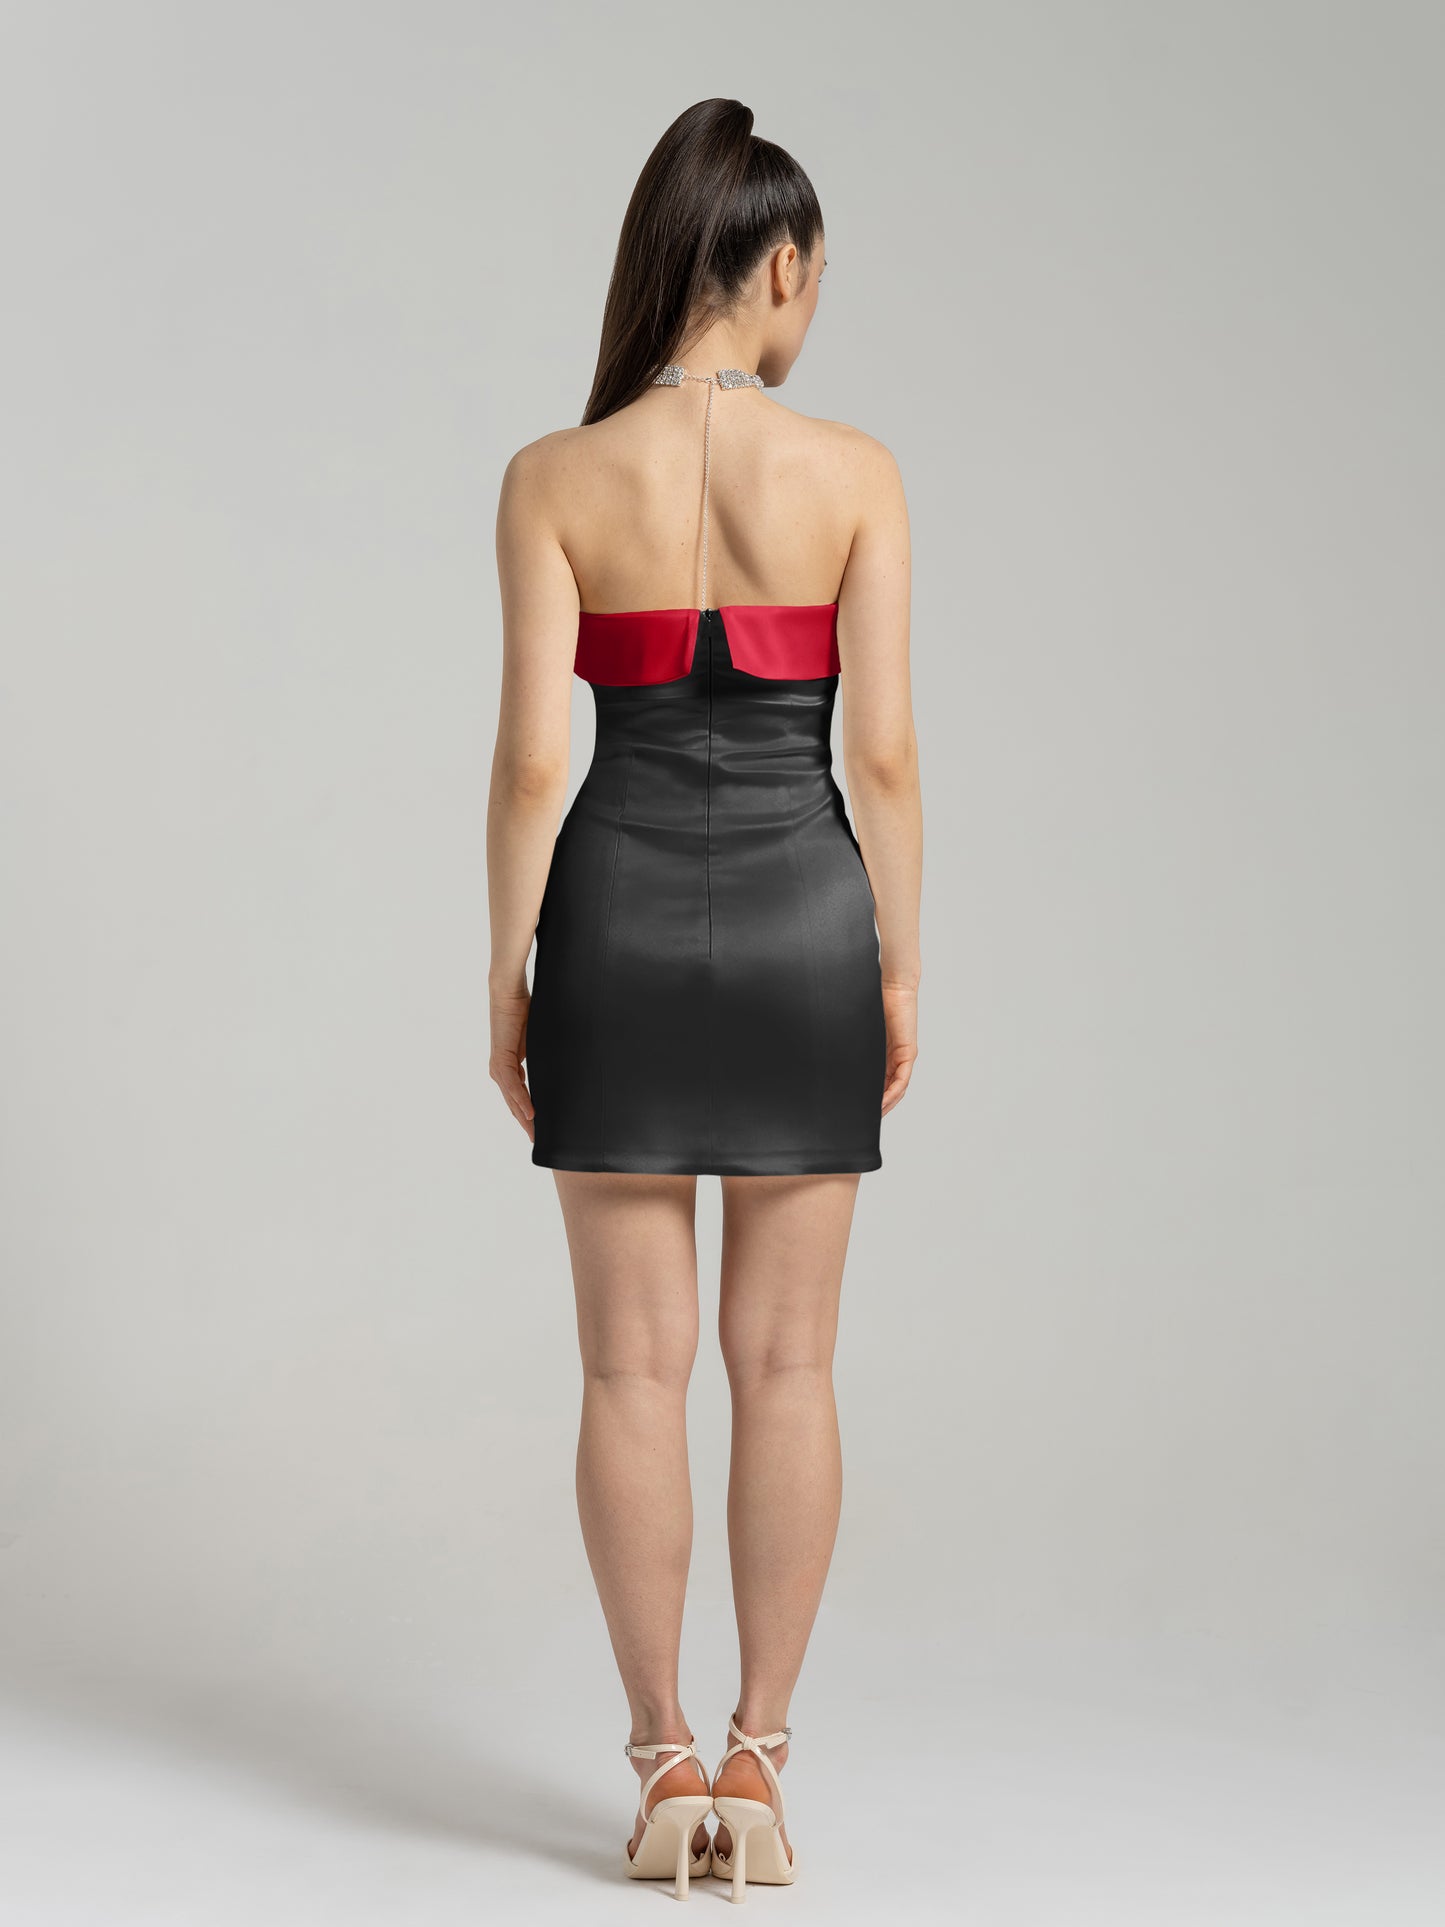 Romantic Allure Satin Mini Dress - Black & Red